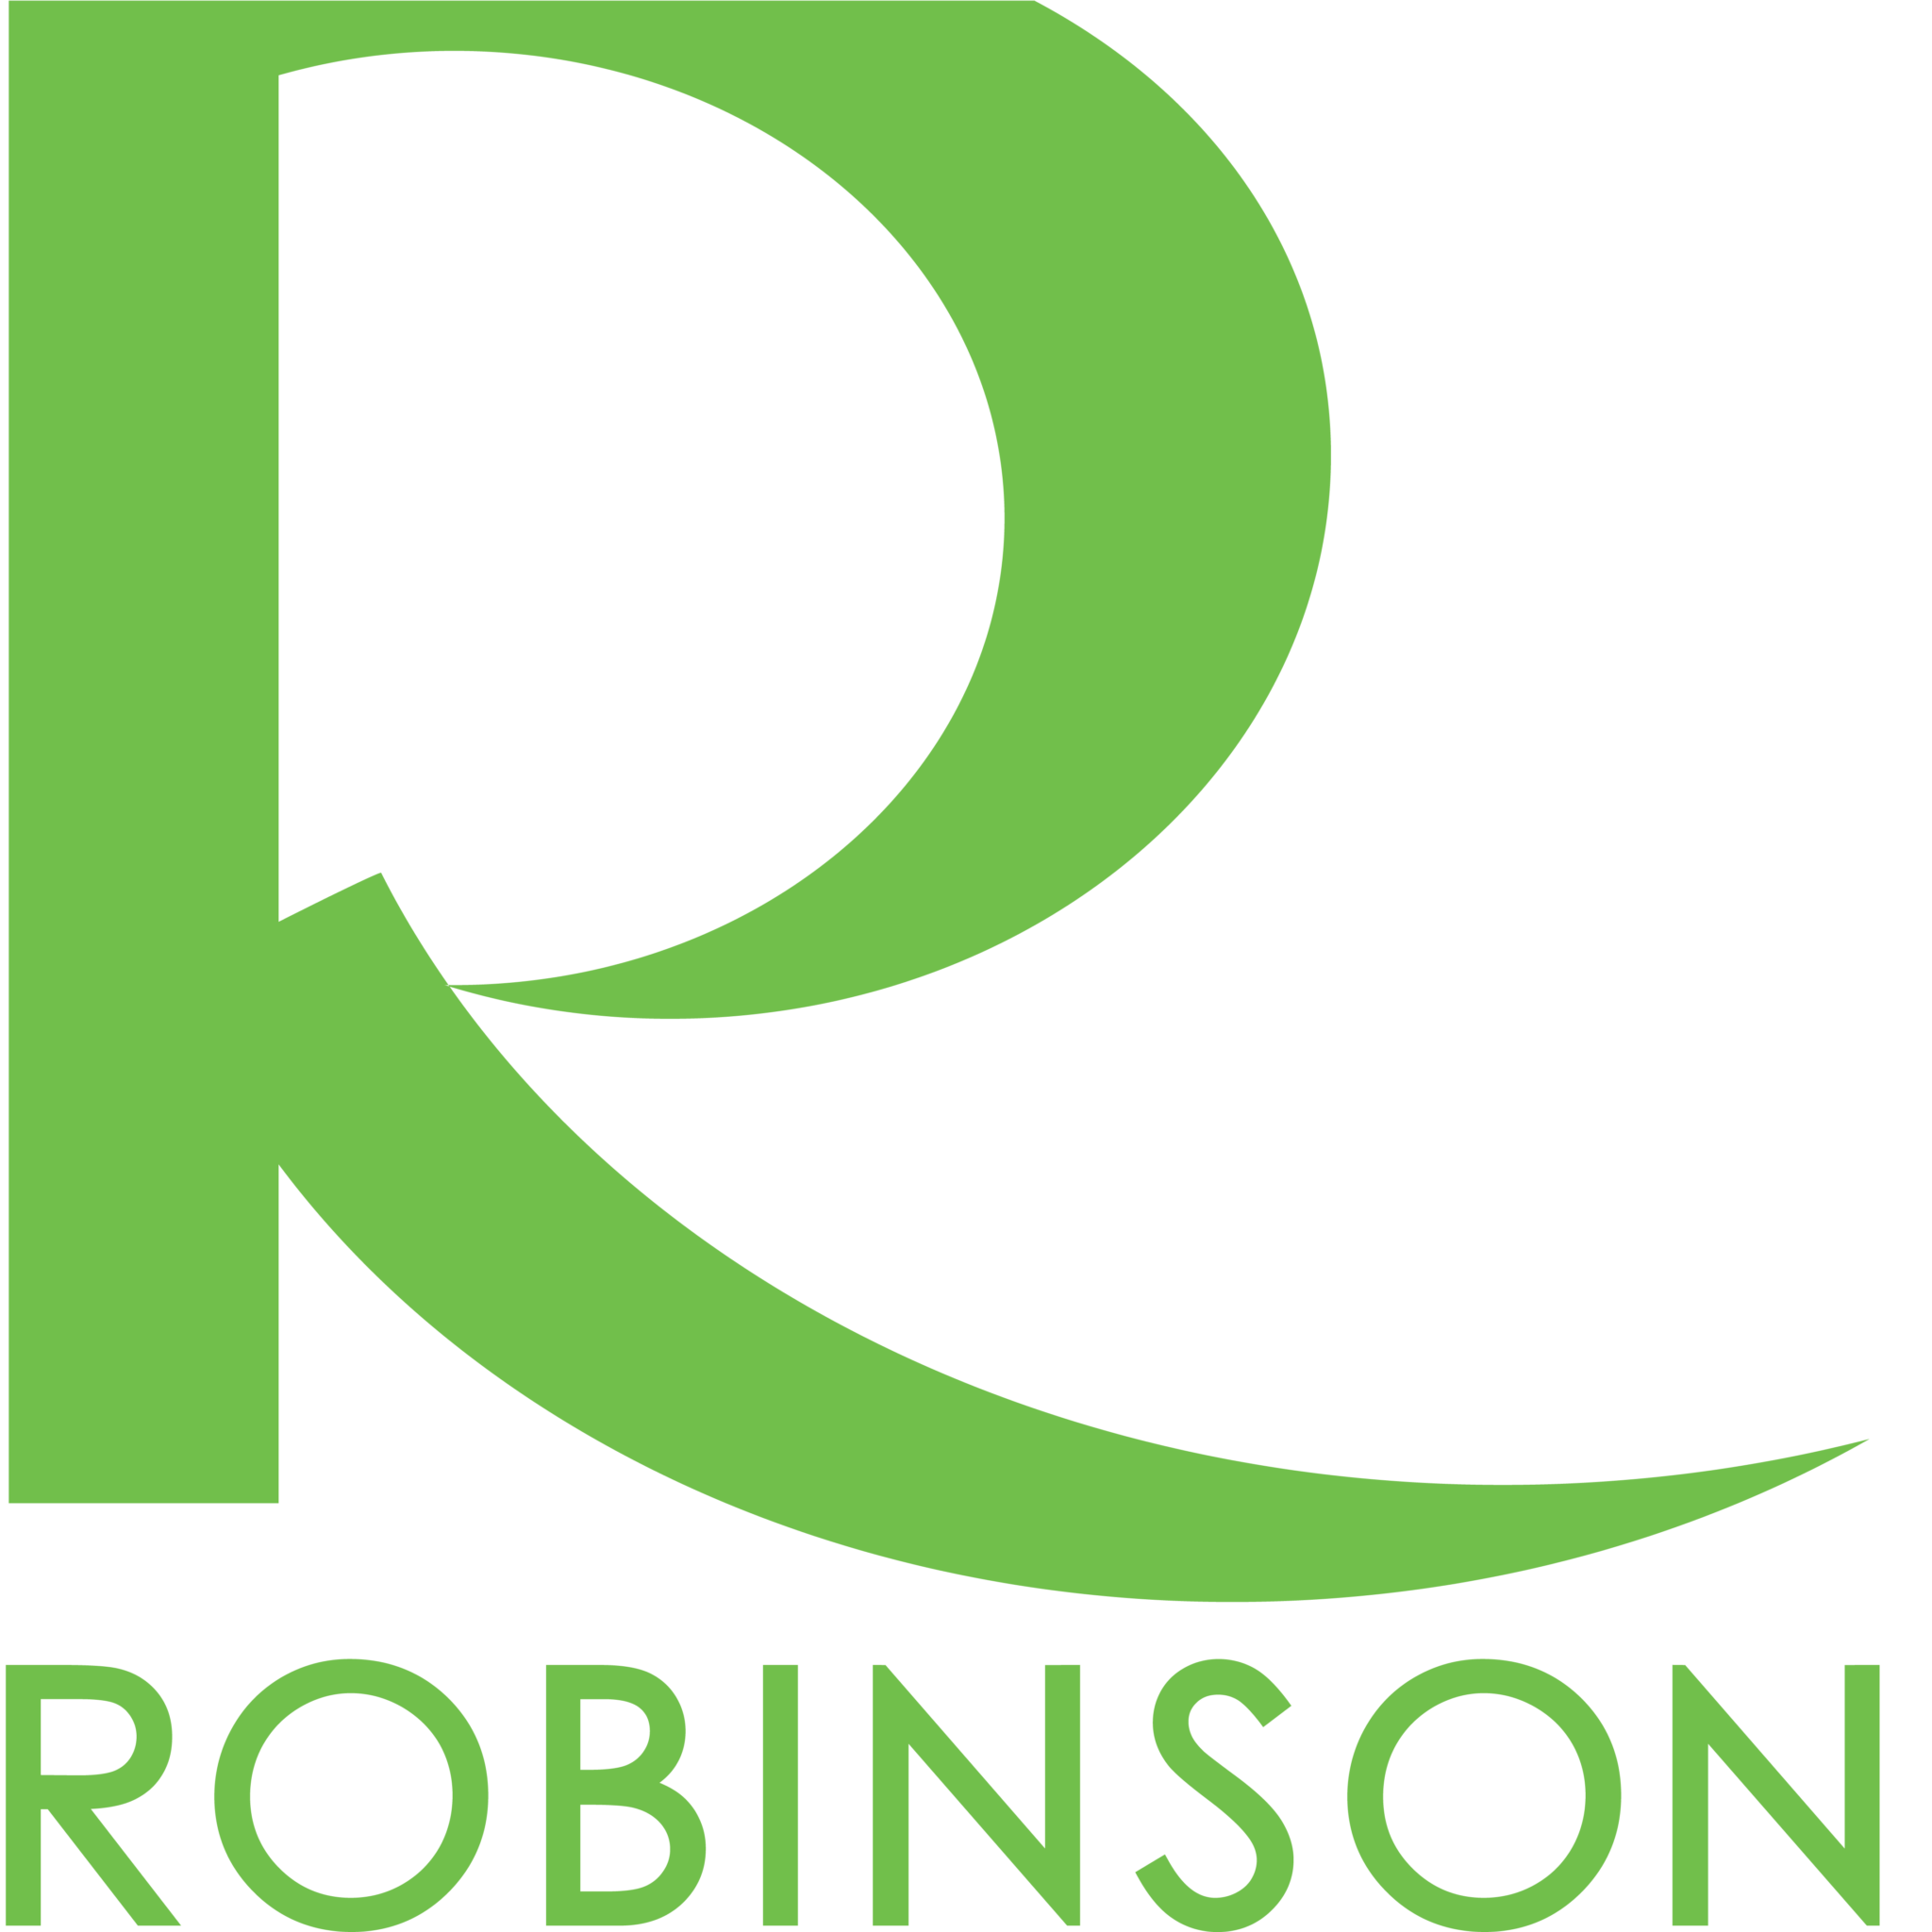 Robinson-01-01